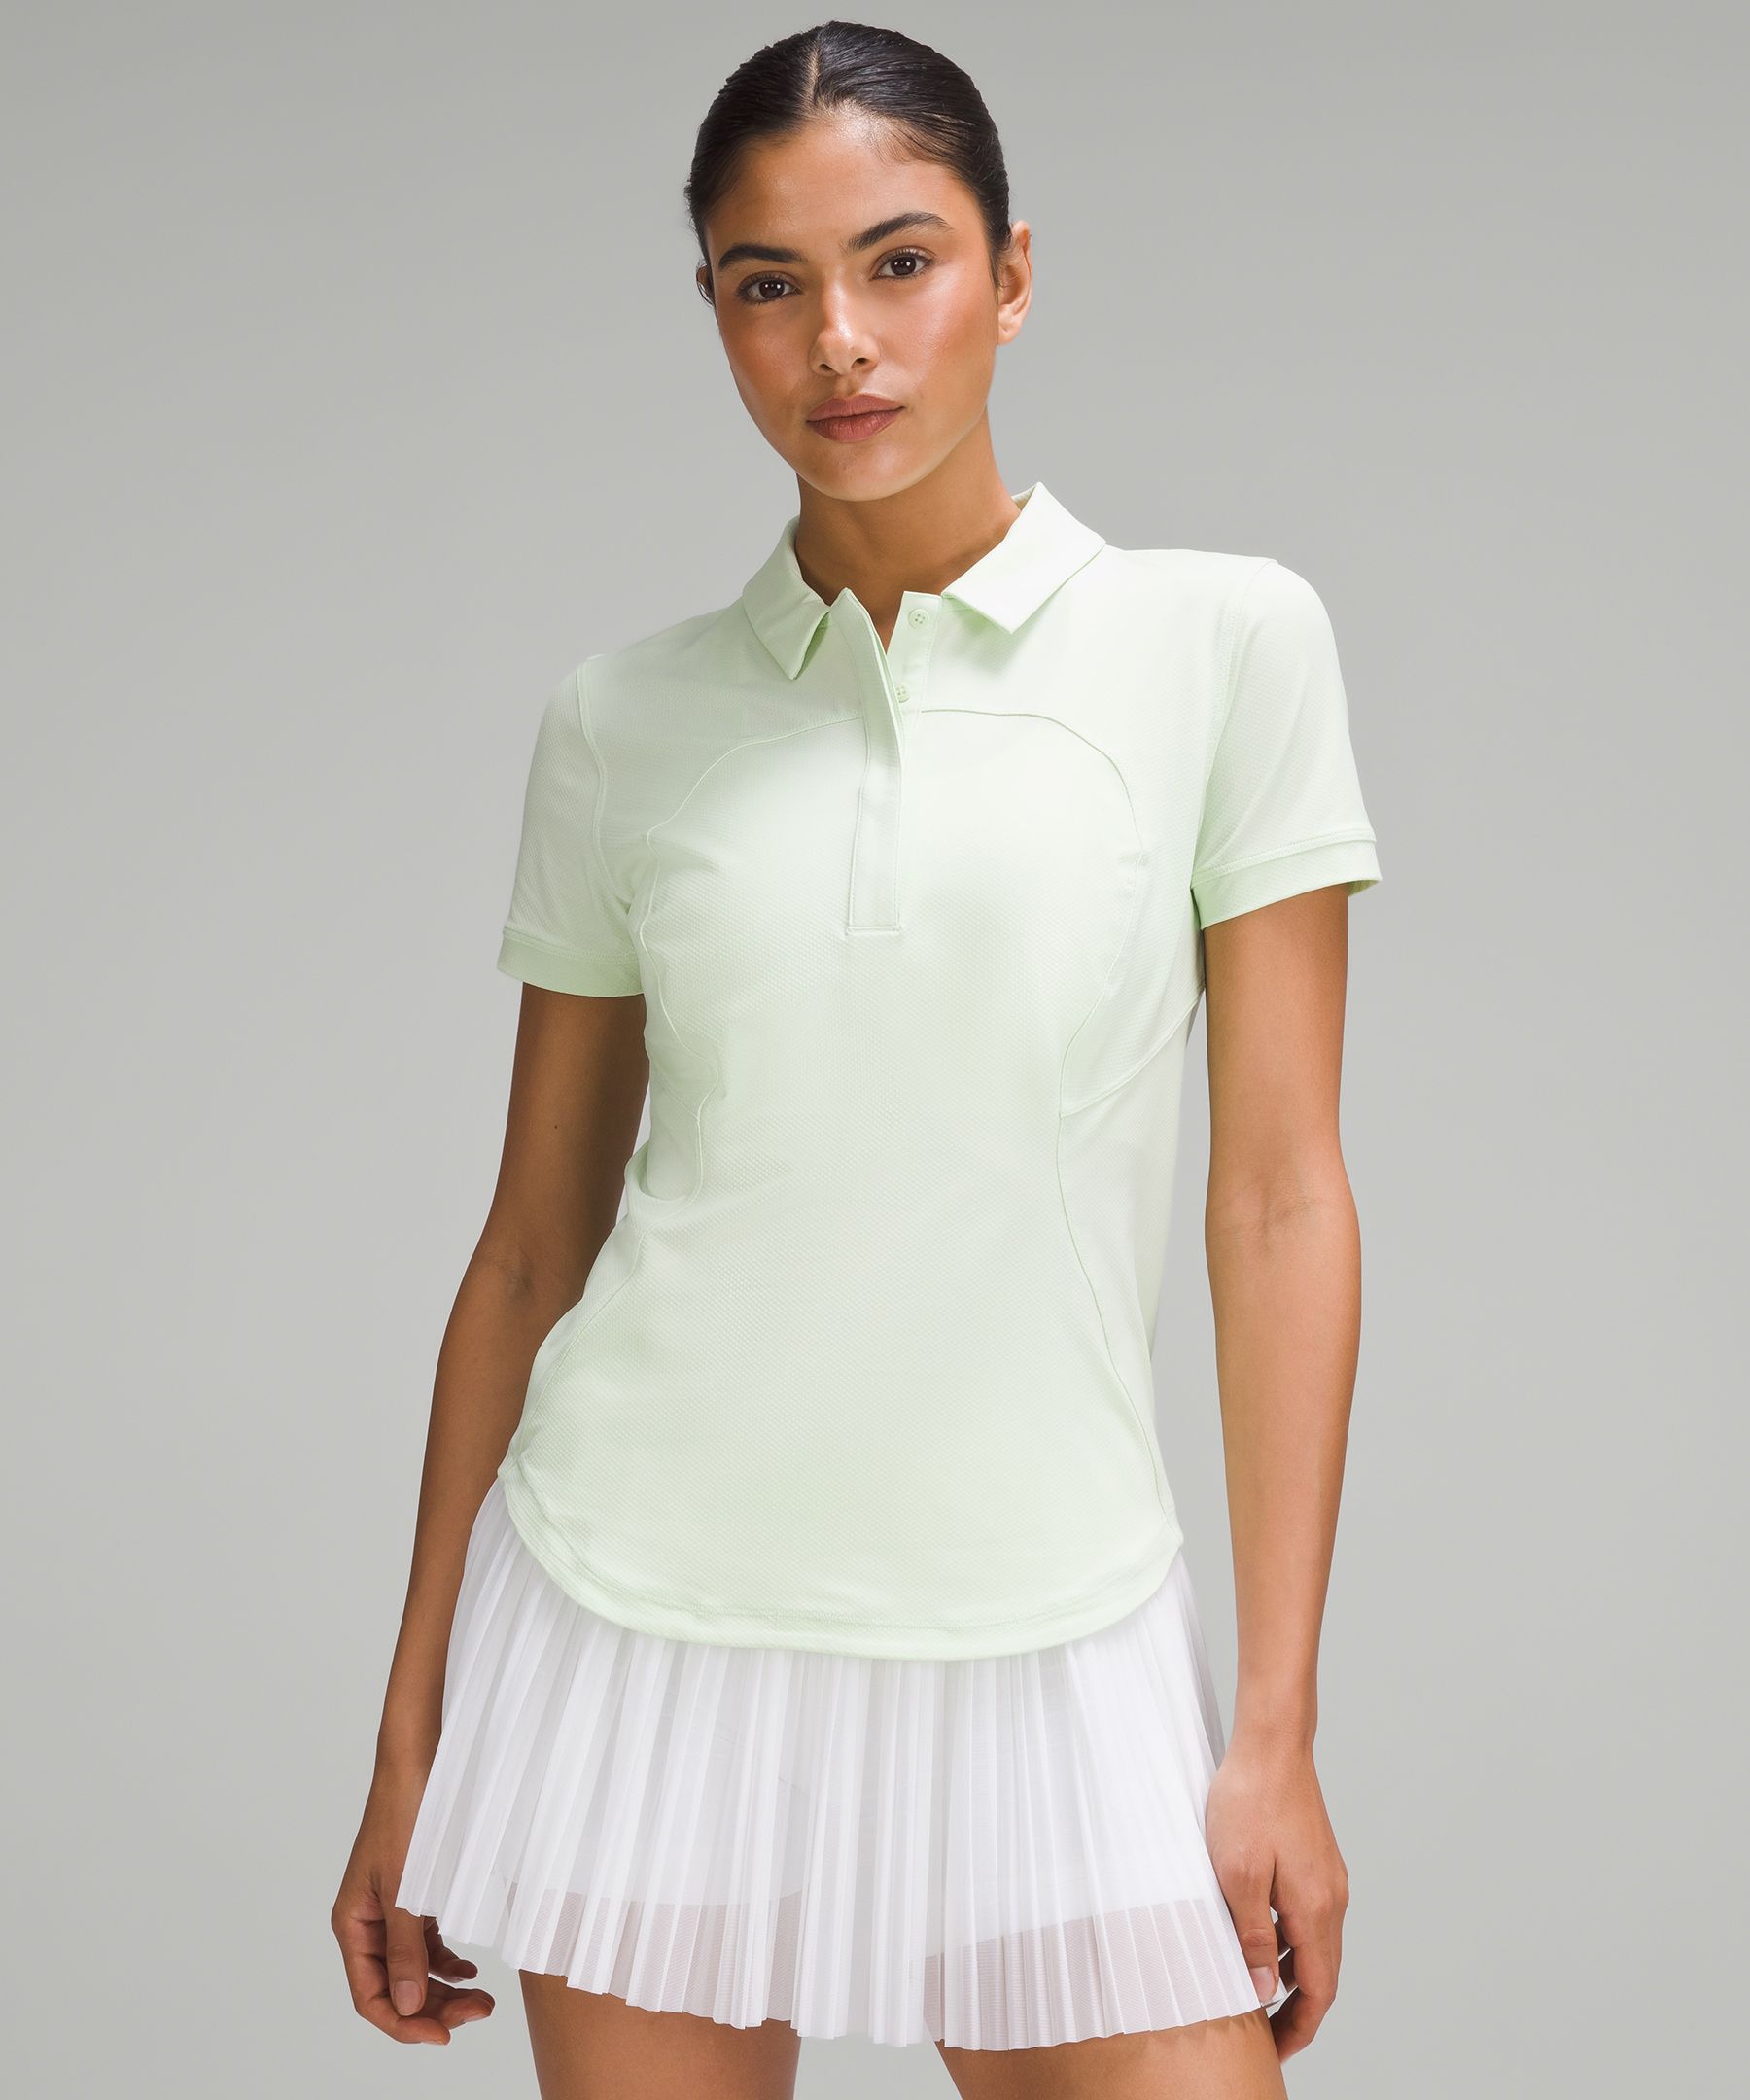 KORALHY Womens Short Sleeve Golf Polo Shirts Quick Dry, UPF 50, Pleated